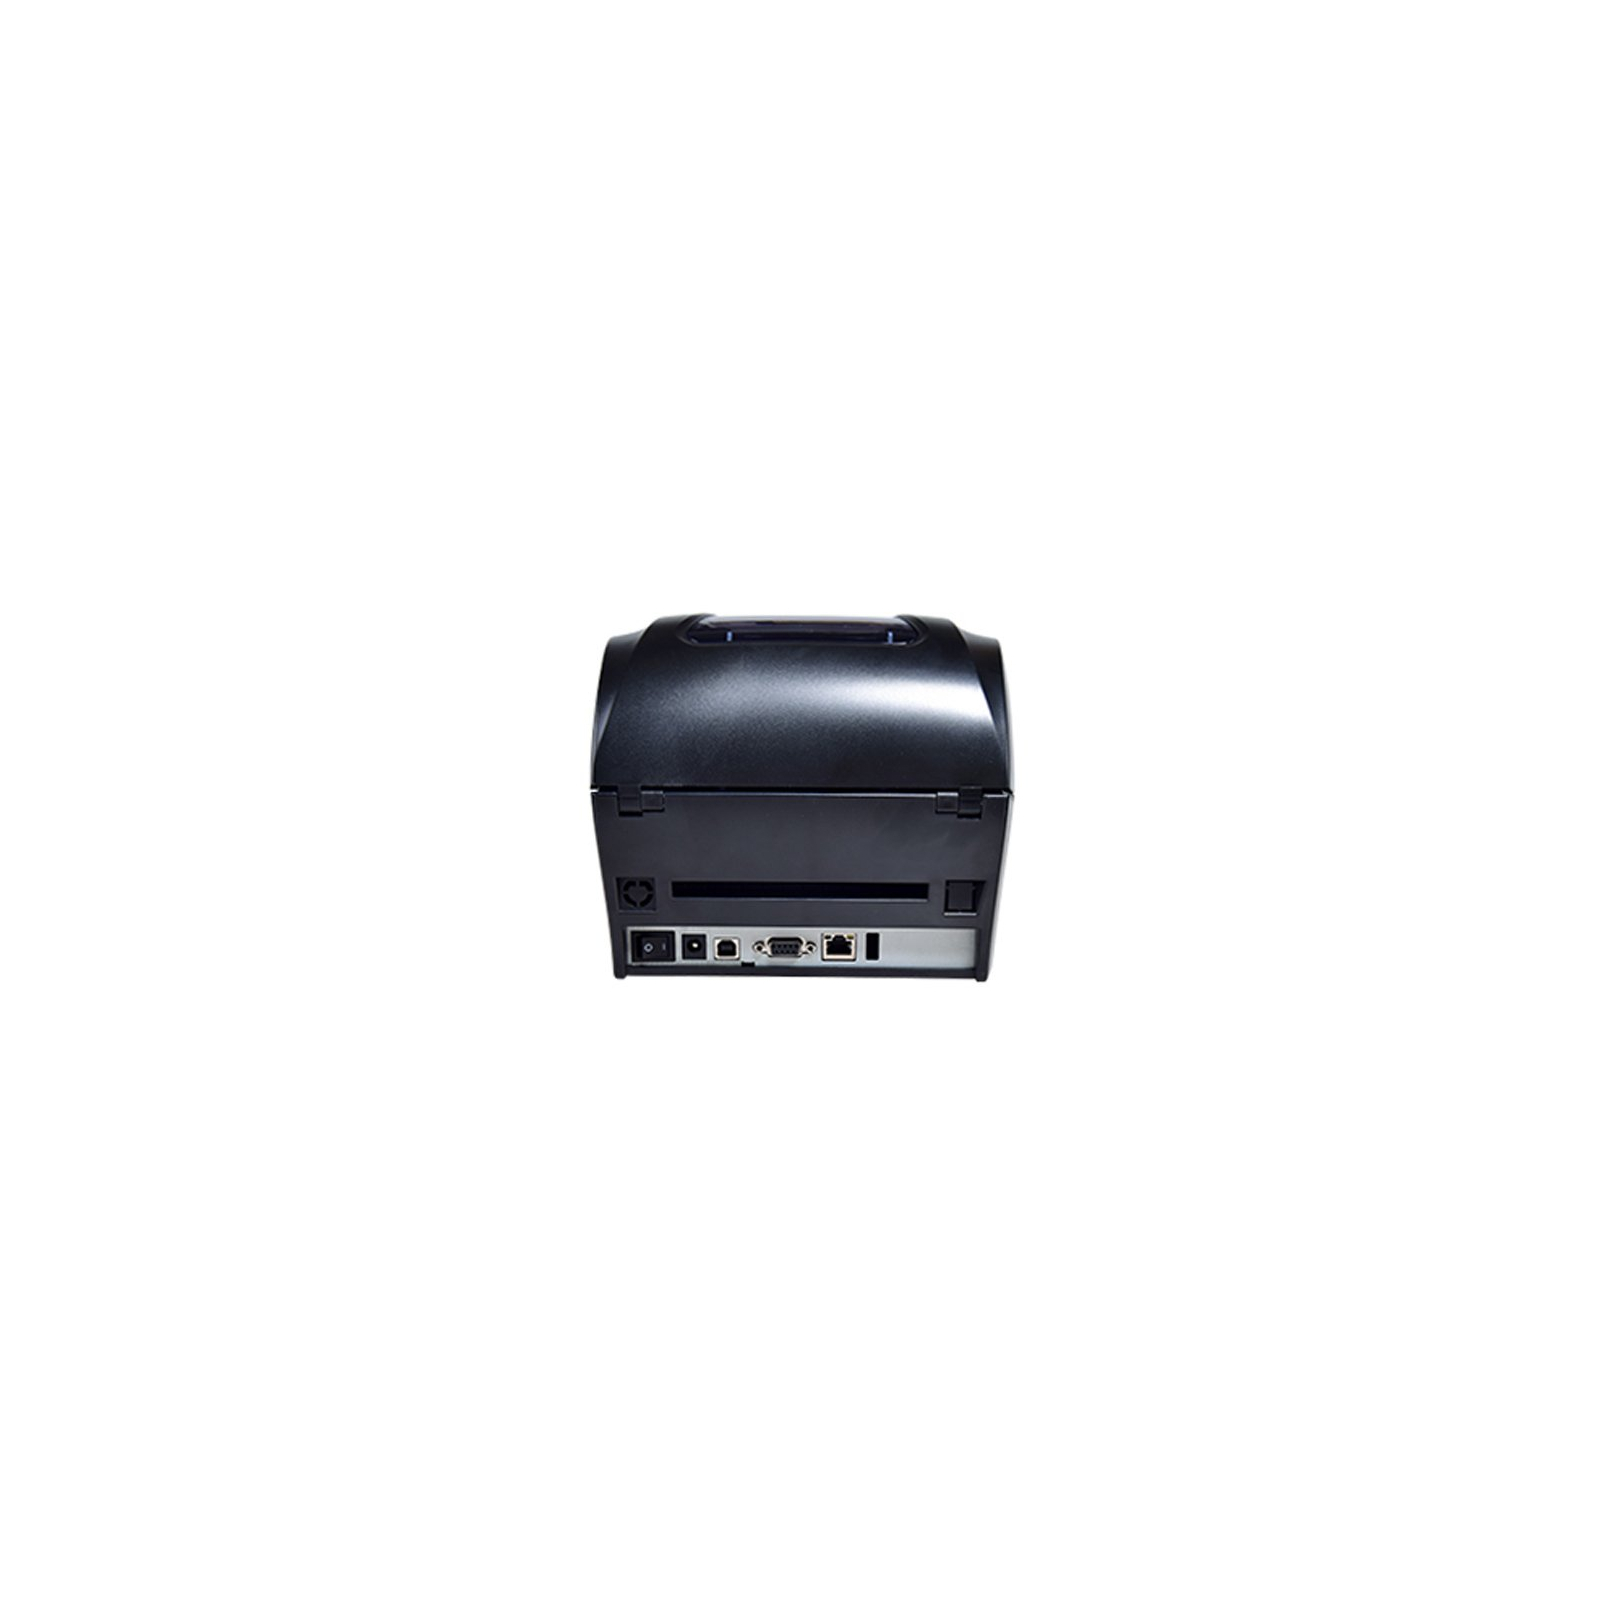 Принтер этикеток HPRT HT300 (USB+Ethenet+ RS232) (13221) изображение 4